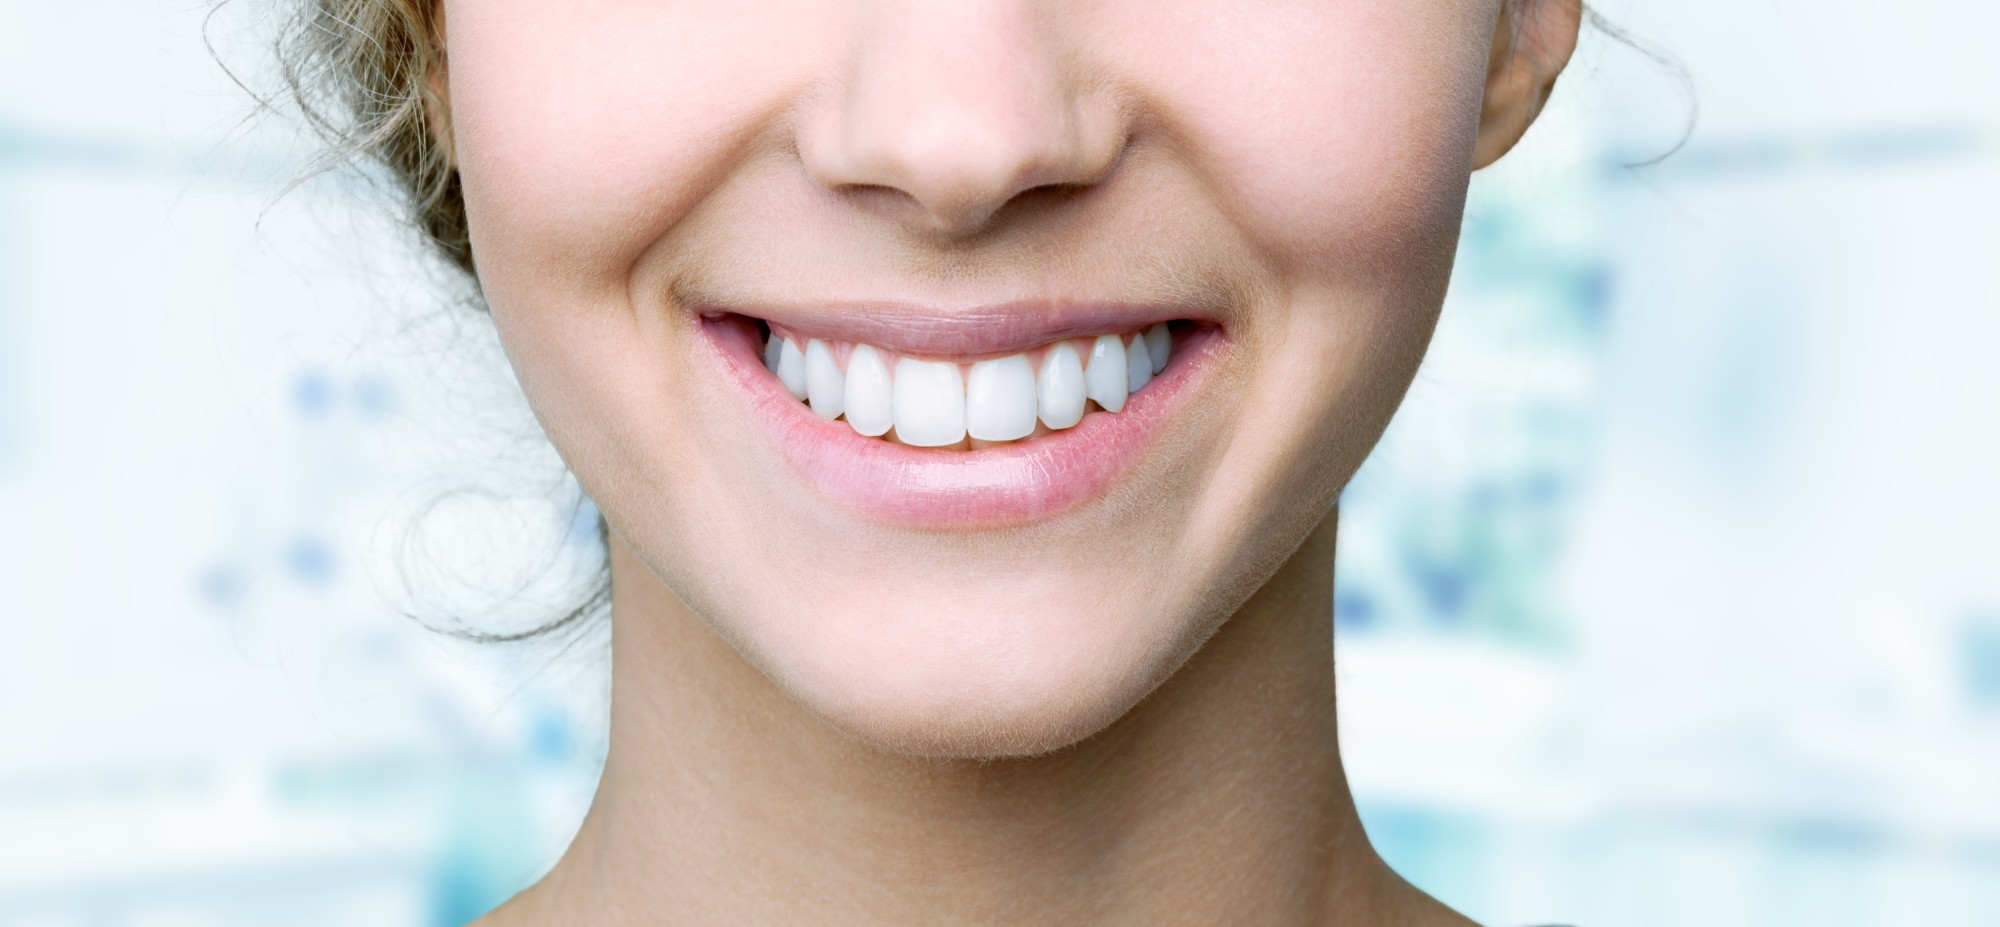 7 Amazing Benefits of Straight Teeth